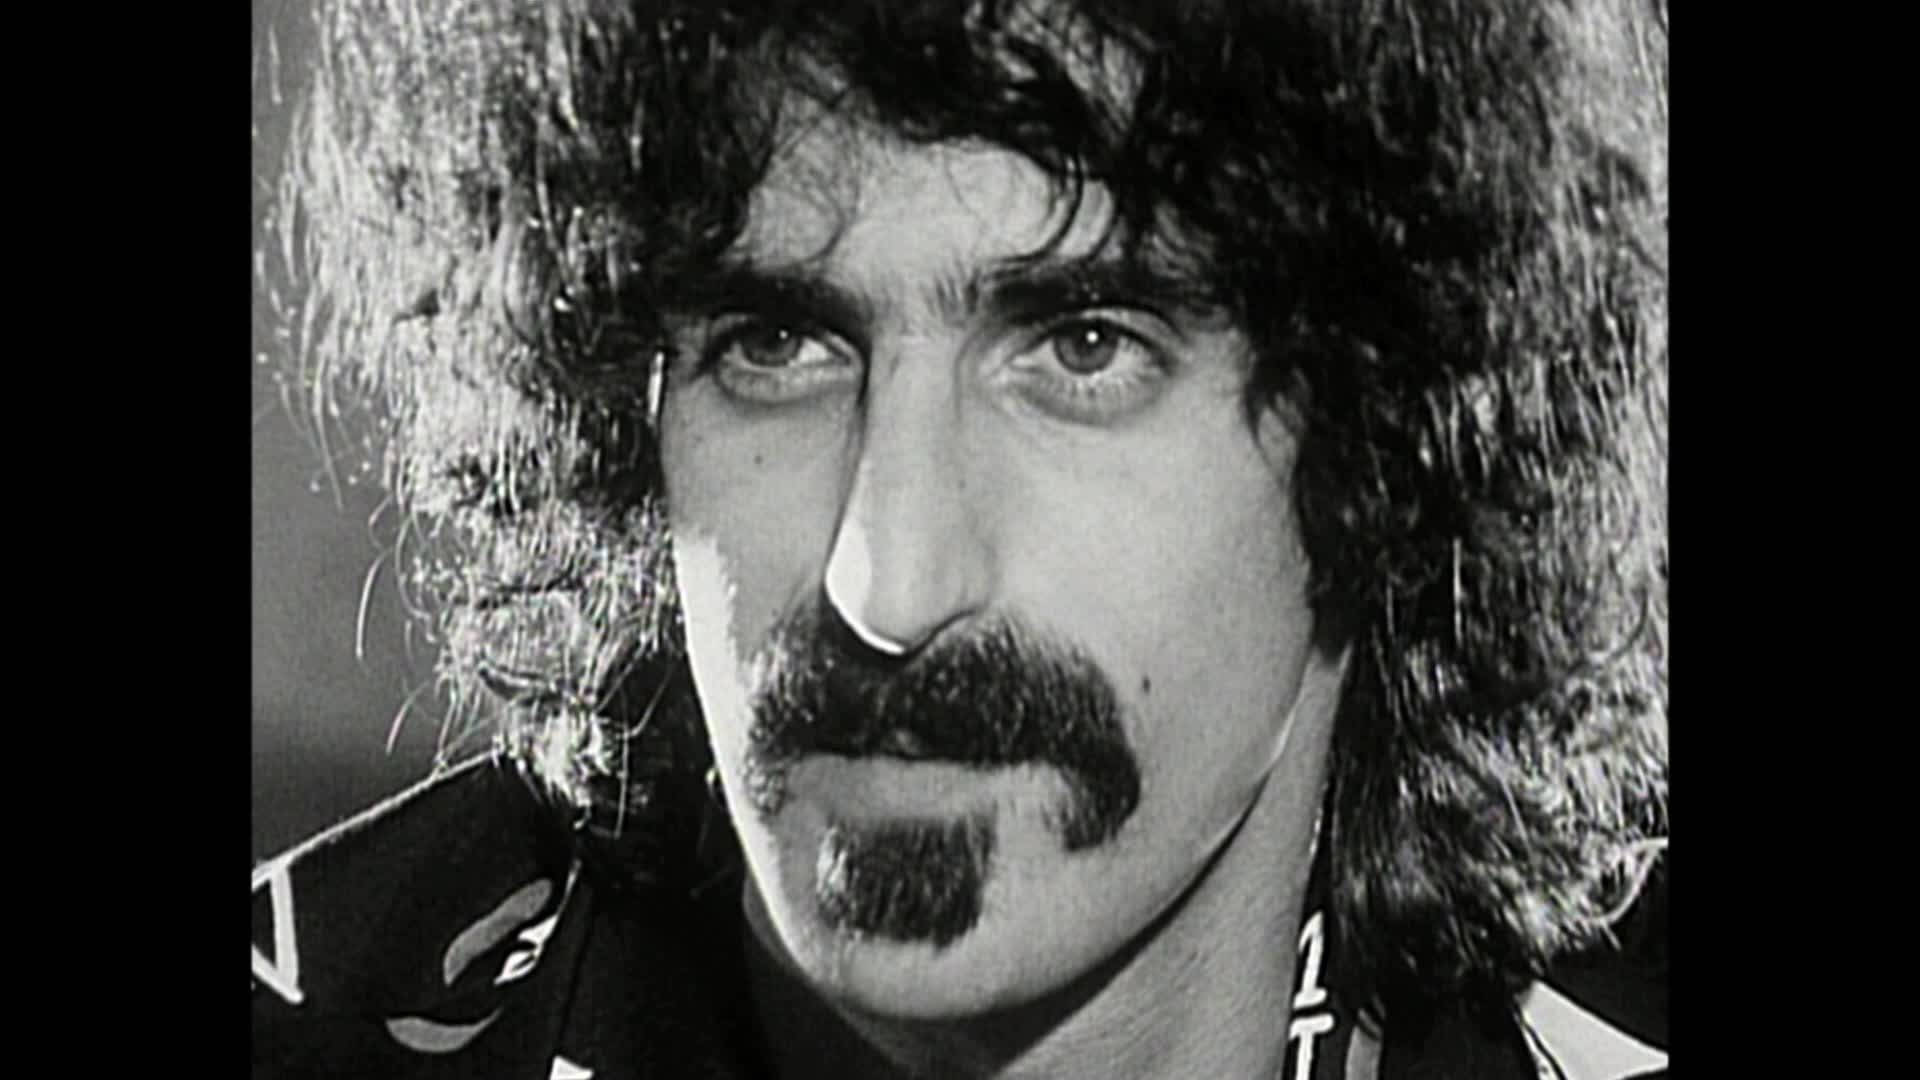 Frank Zappa Moustache